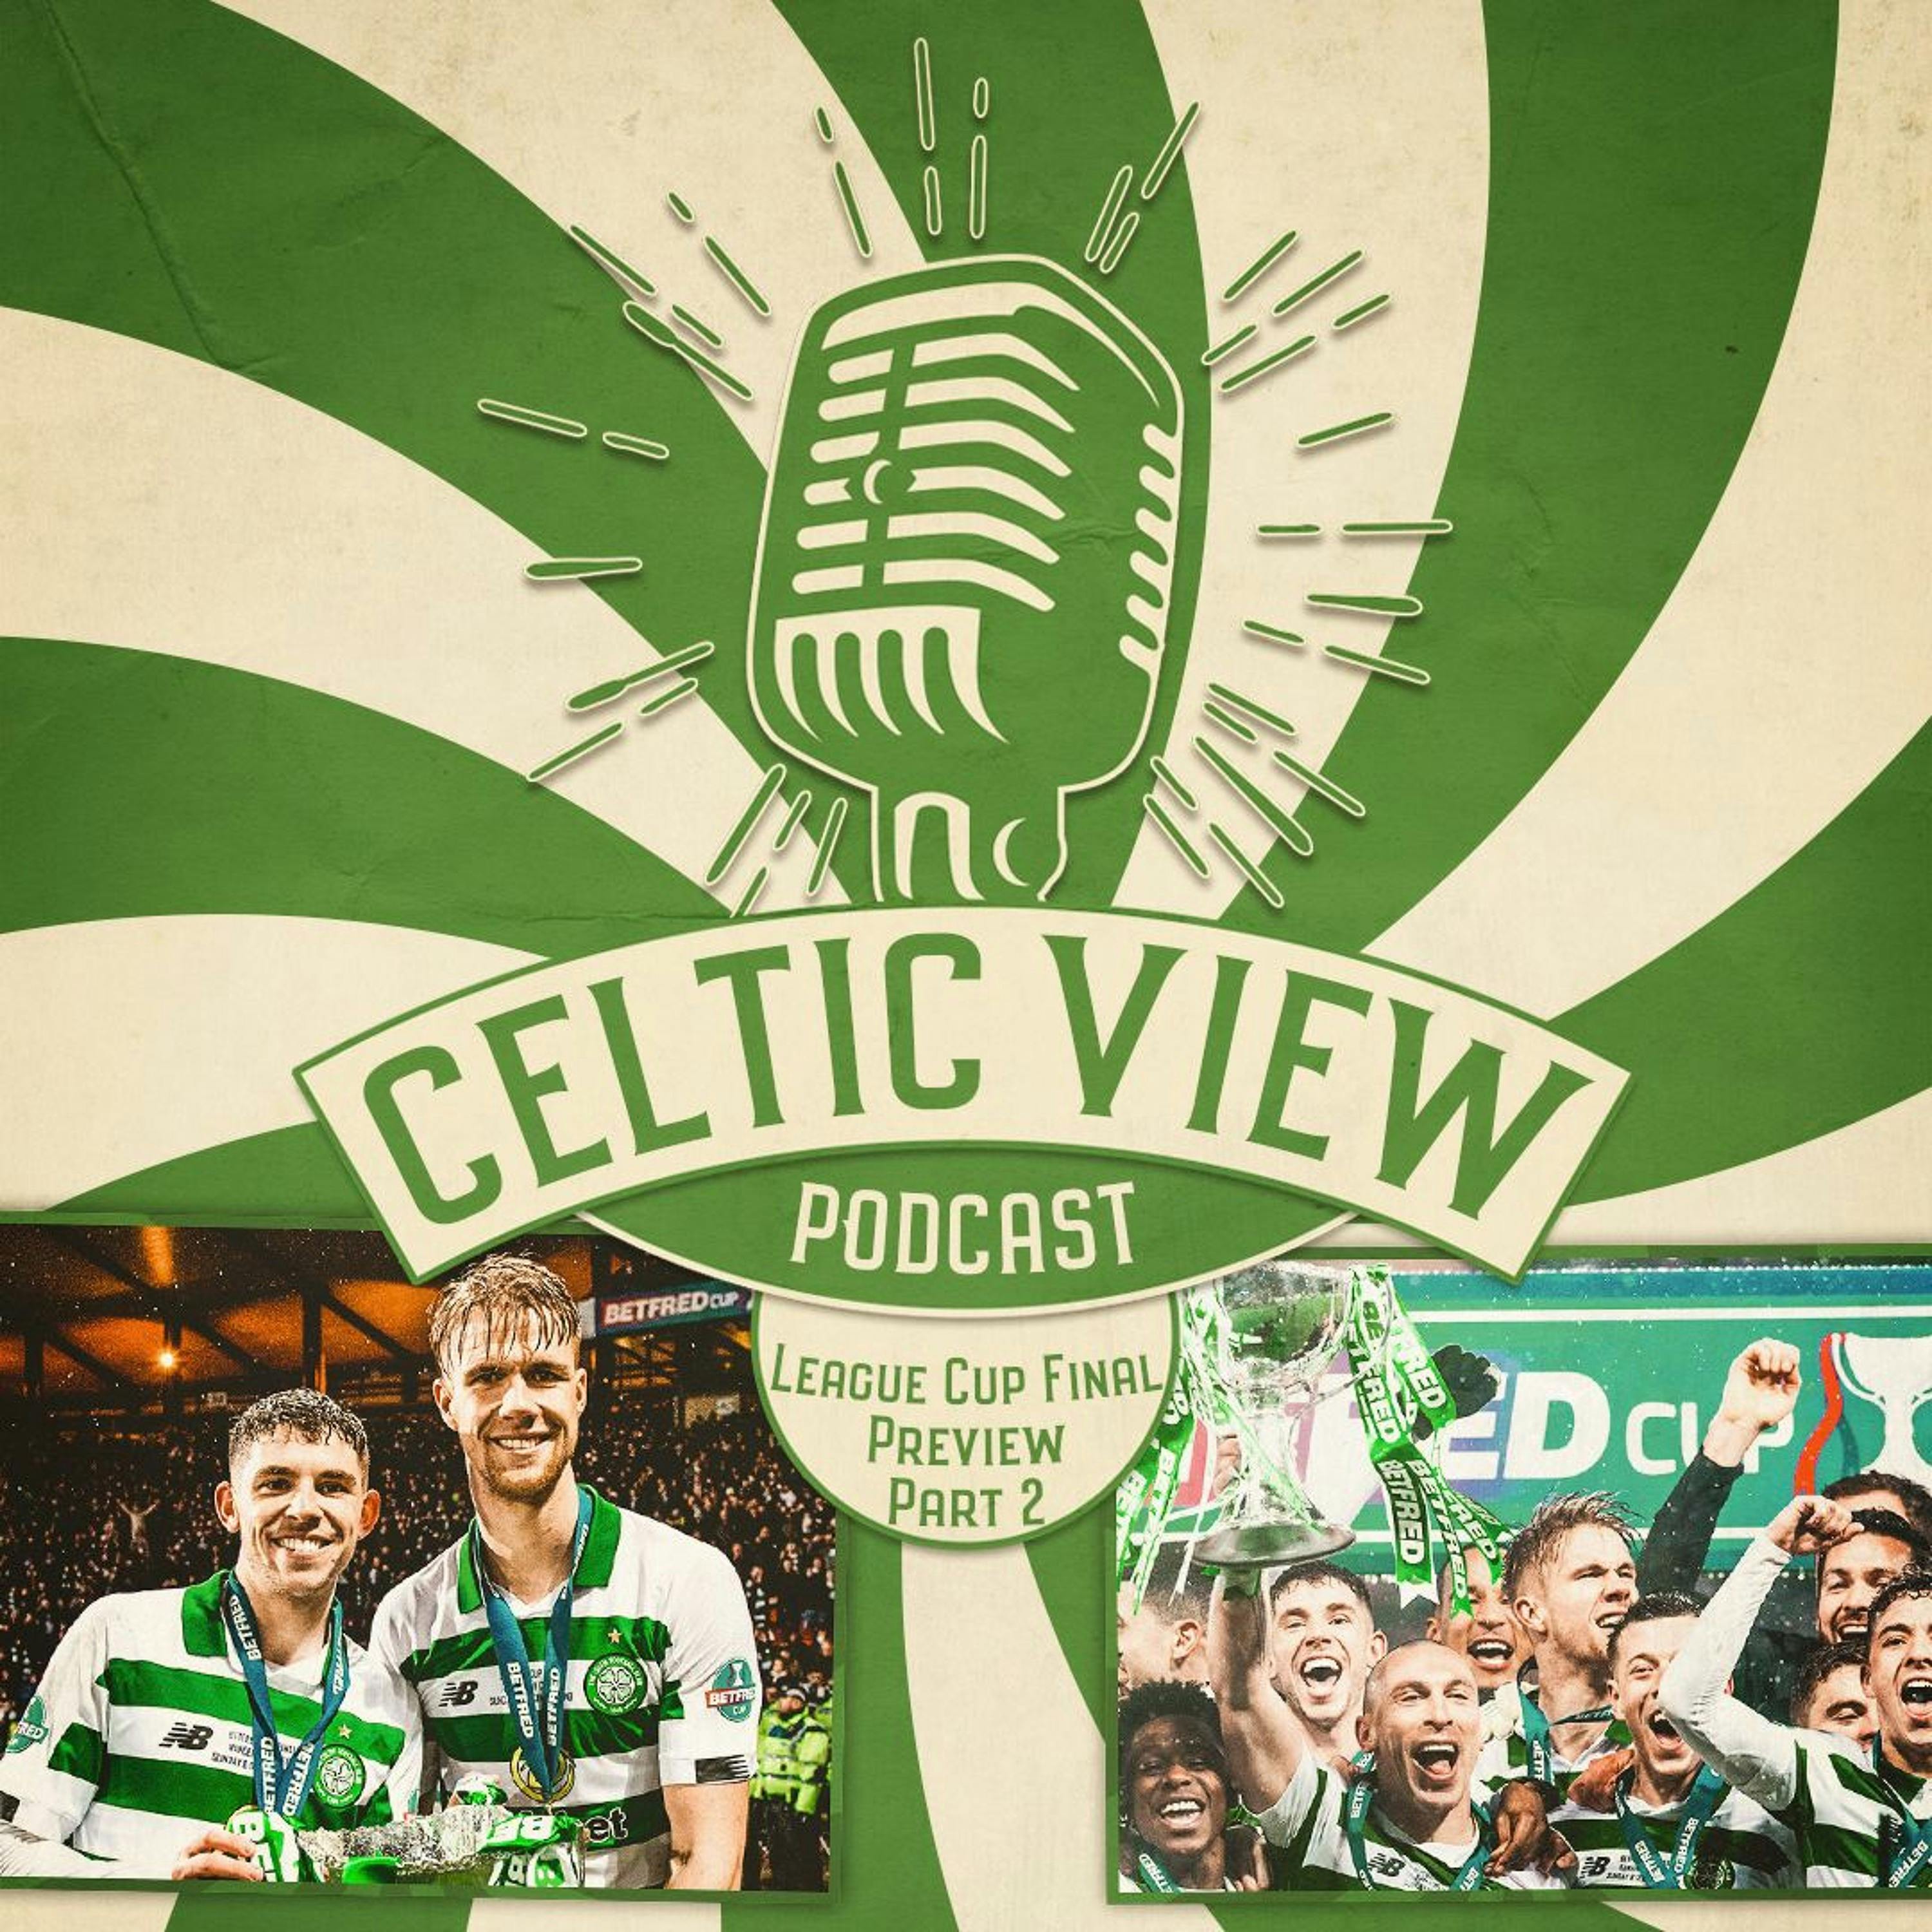 Episode 27 | League Cup Final preview Part 2 with Special Guest Kris Ajer on Cups, Derbies & Celtic